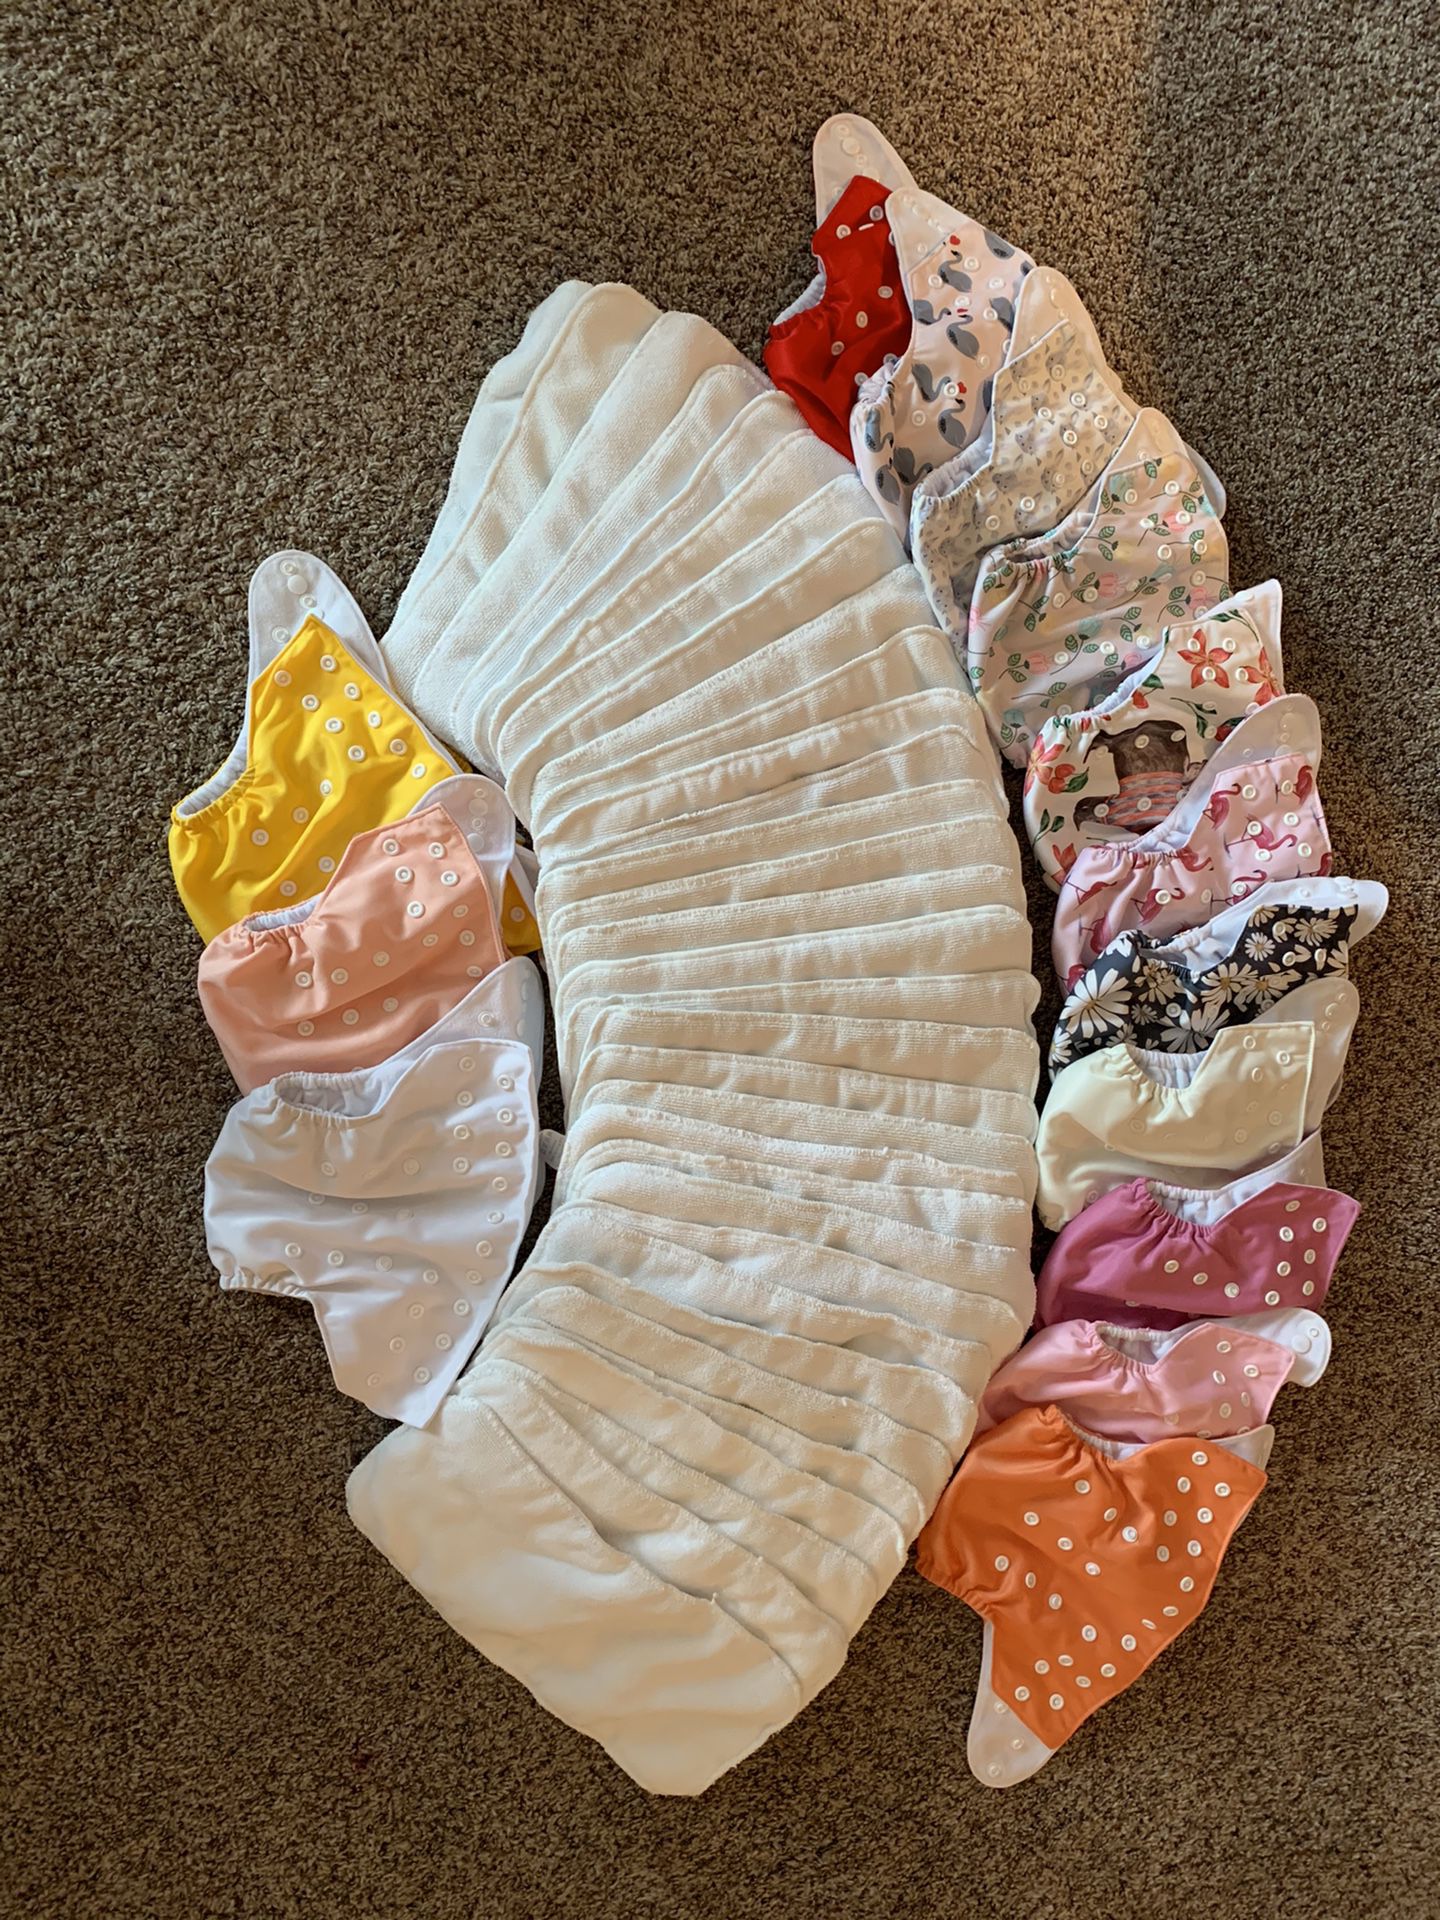 14 cloth diapers, 32 microfiber liners, diaper sprayer